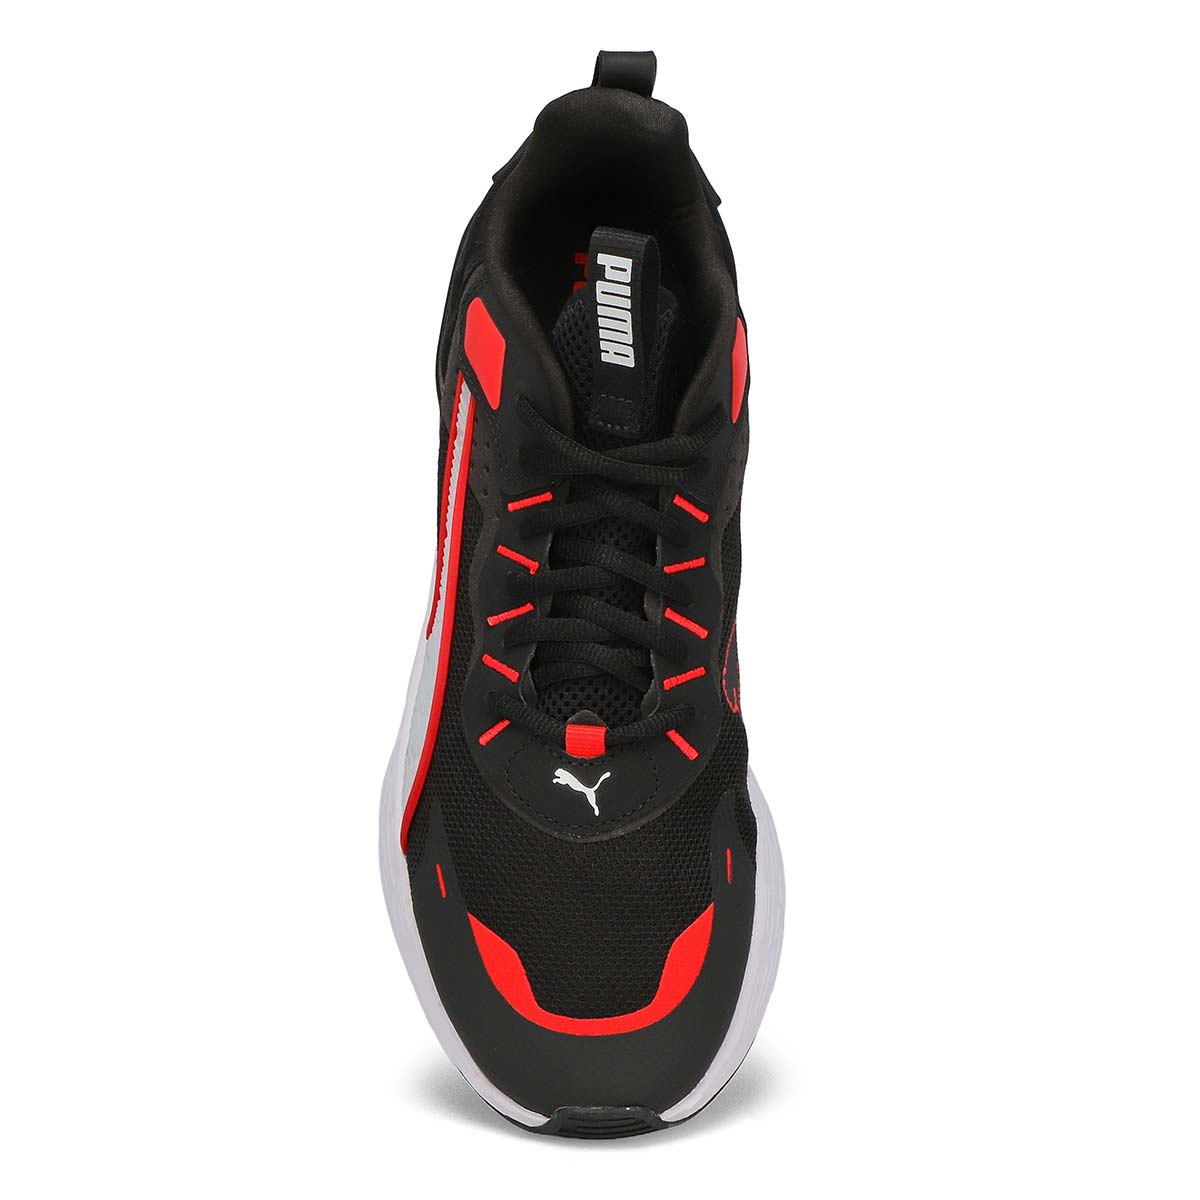 Men's Softride Sway Mesh Sneaker - Black/White/Red